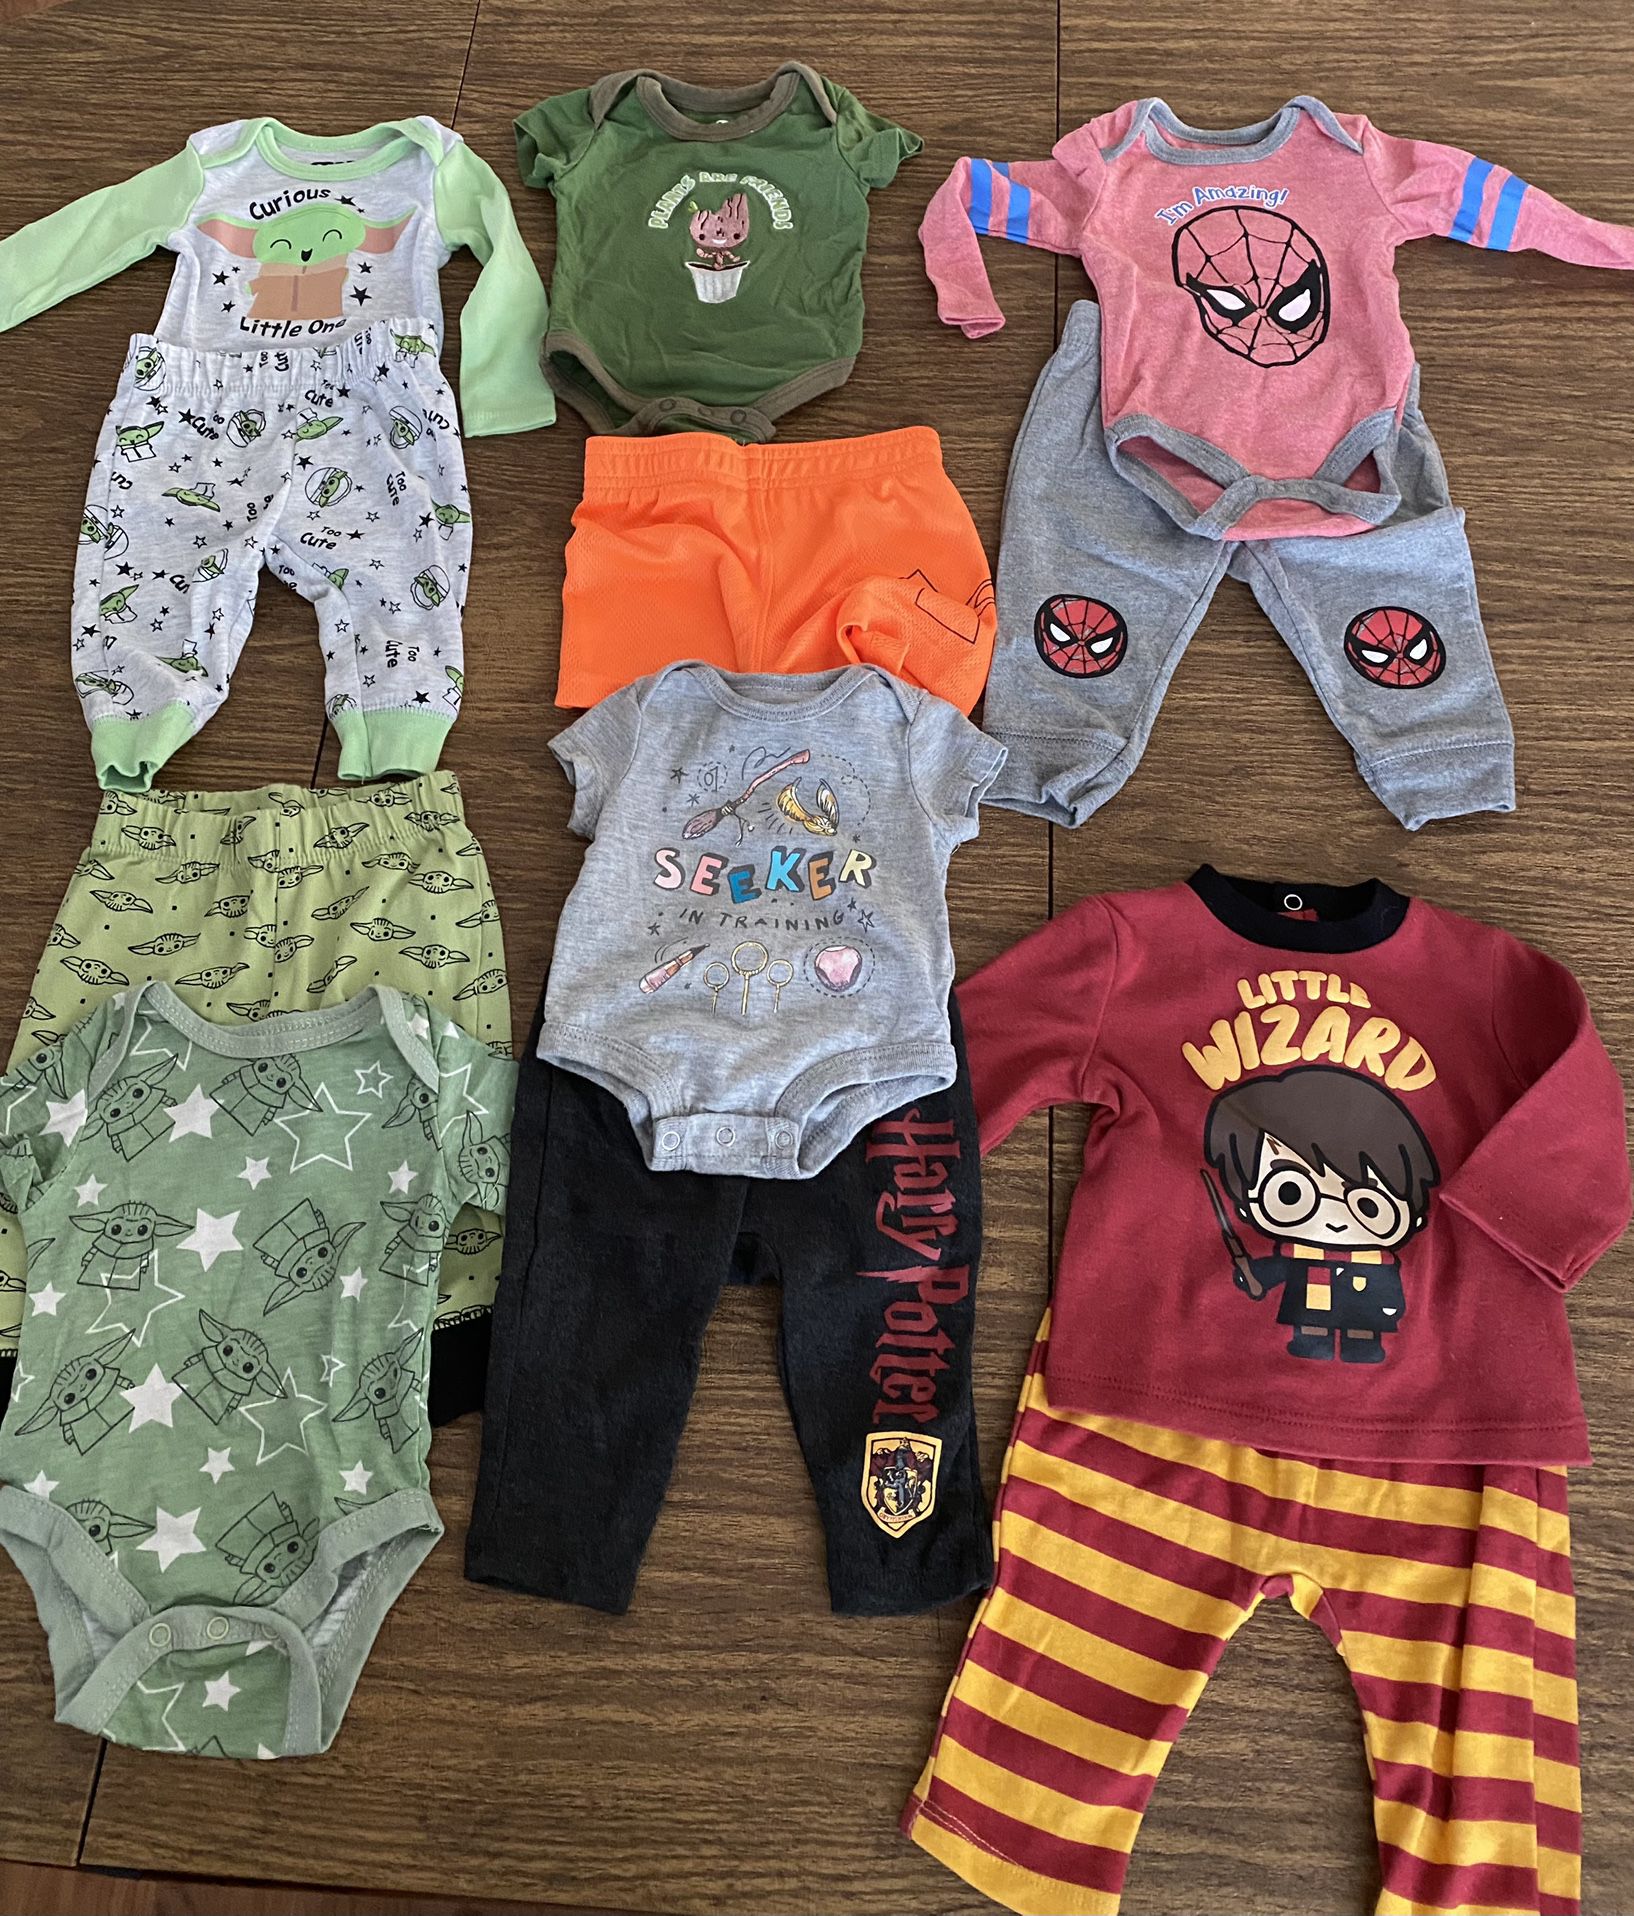 INFANT BOY CLOTHES. - Size 0 -3 Months -Nike Under Armor -Star Wars -Disney more 